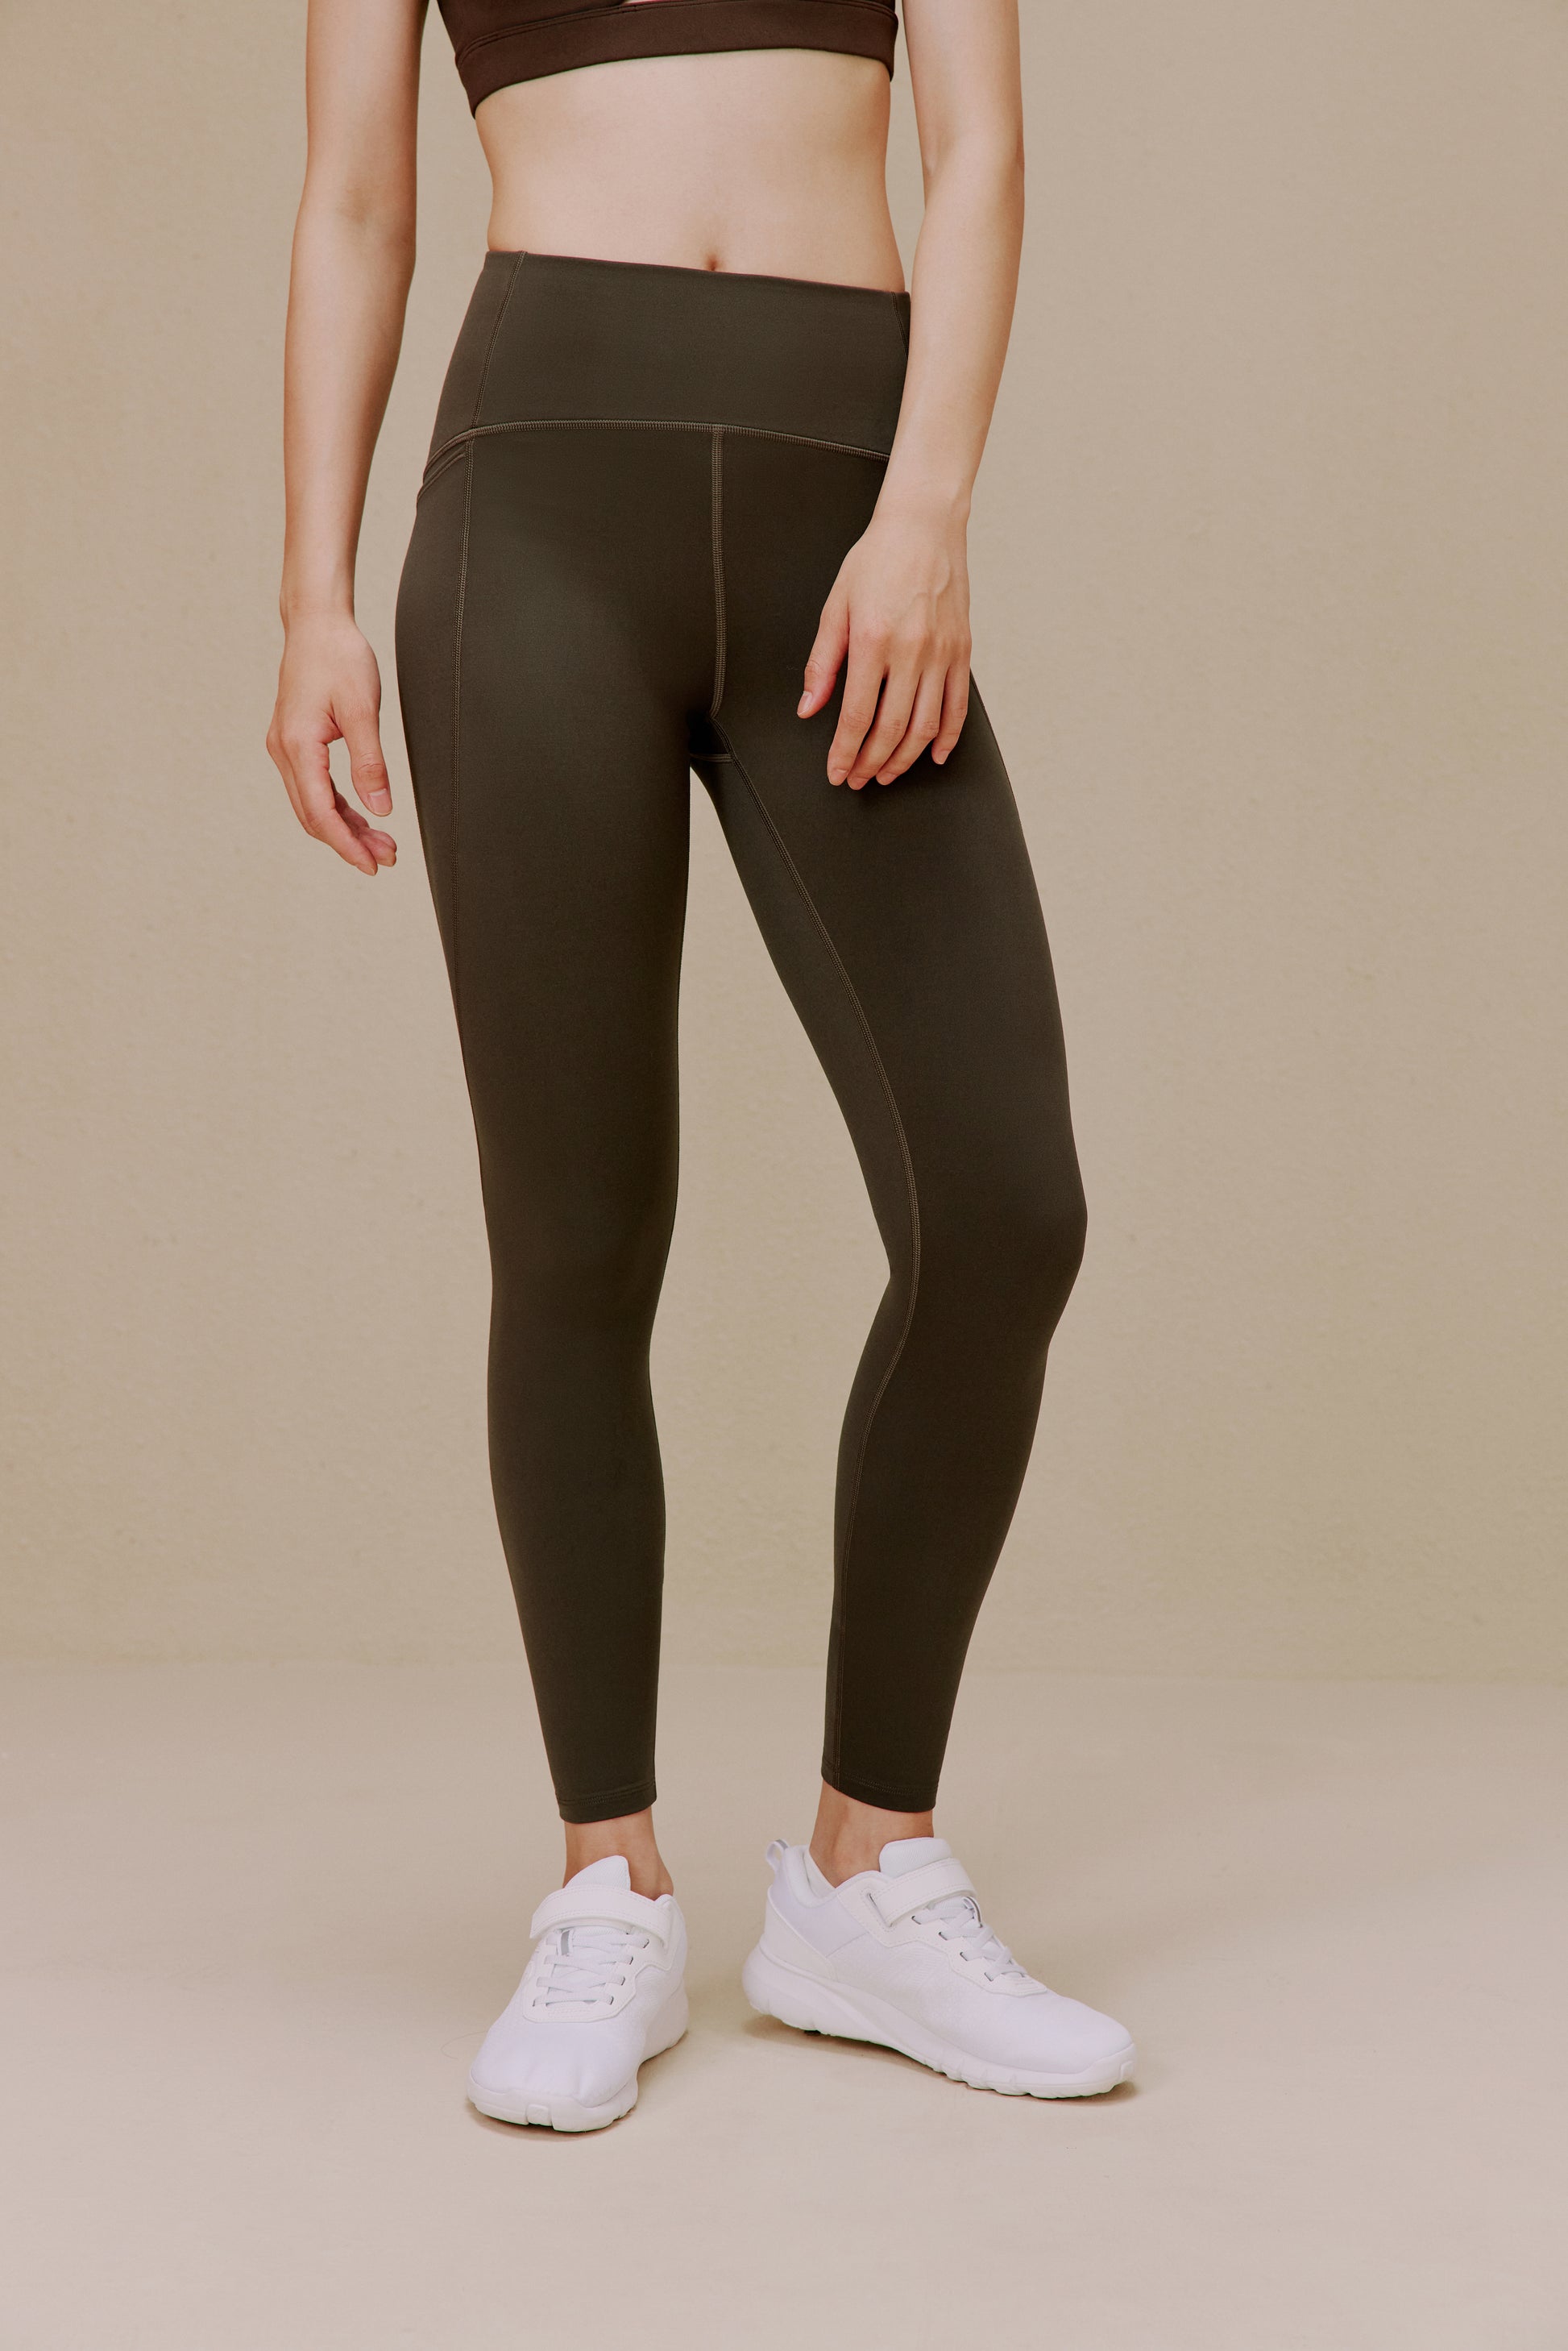 Tangerine Womens Pants Size XXL Yoga Running Athletic Legging Activewear